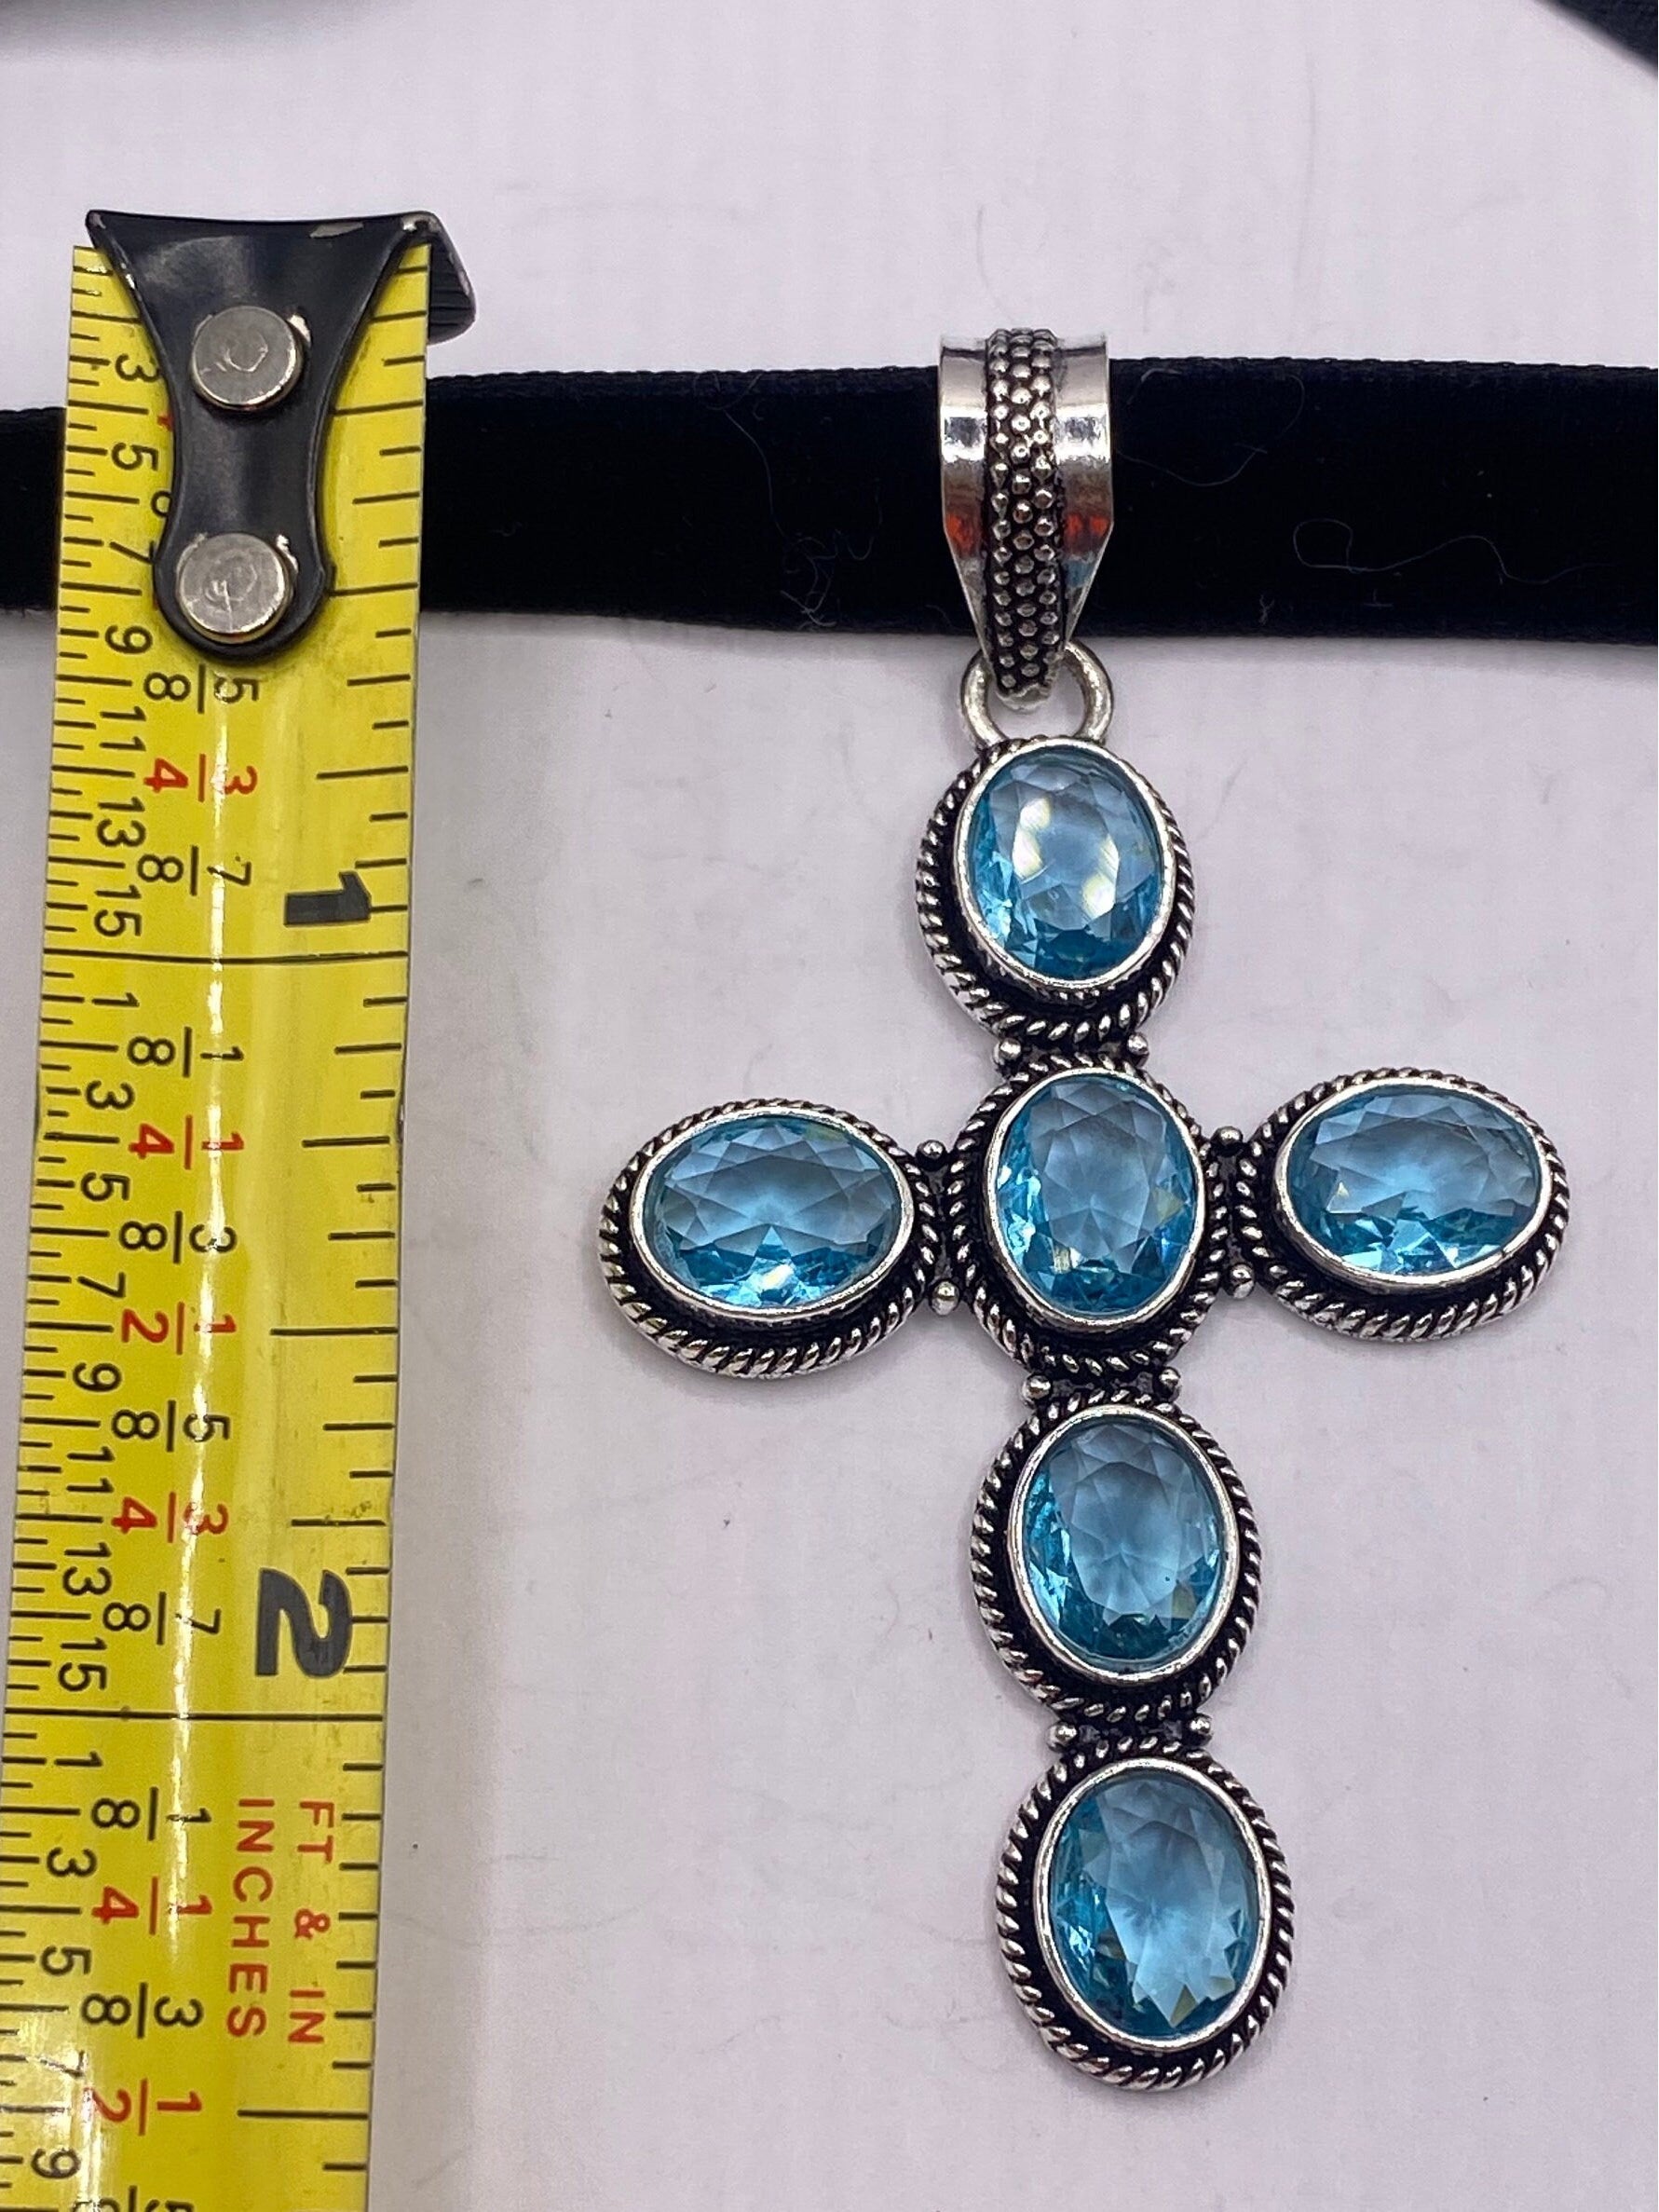 Vintage Aqua Blue Topaz Cross Choker Necklace